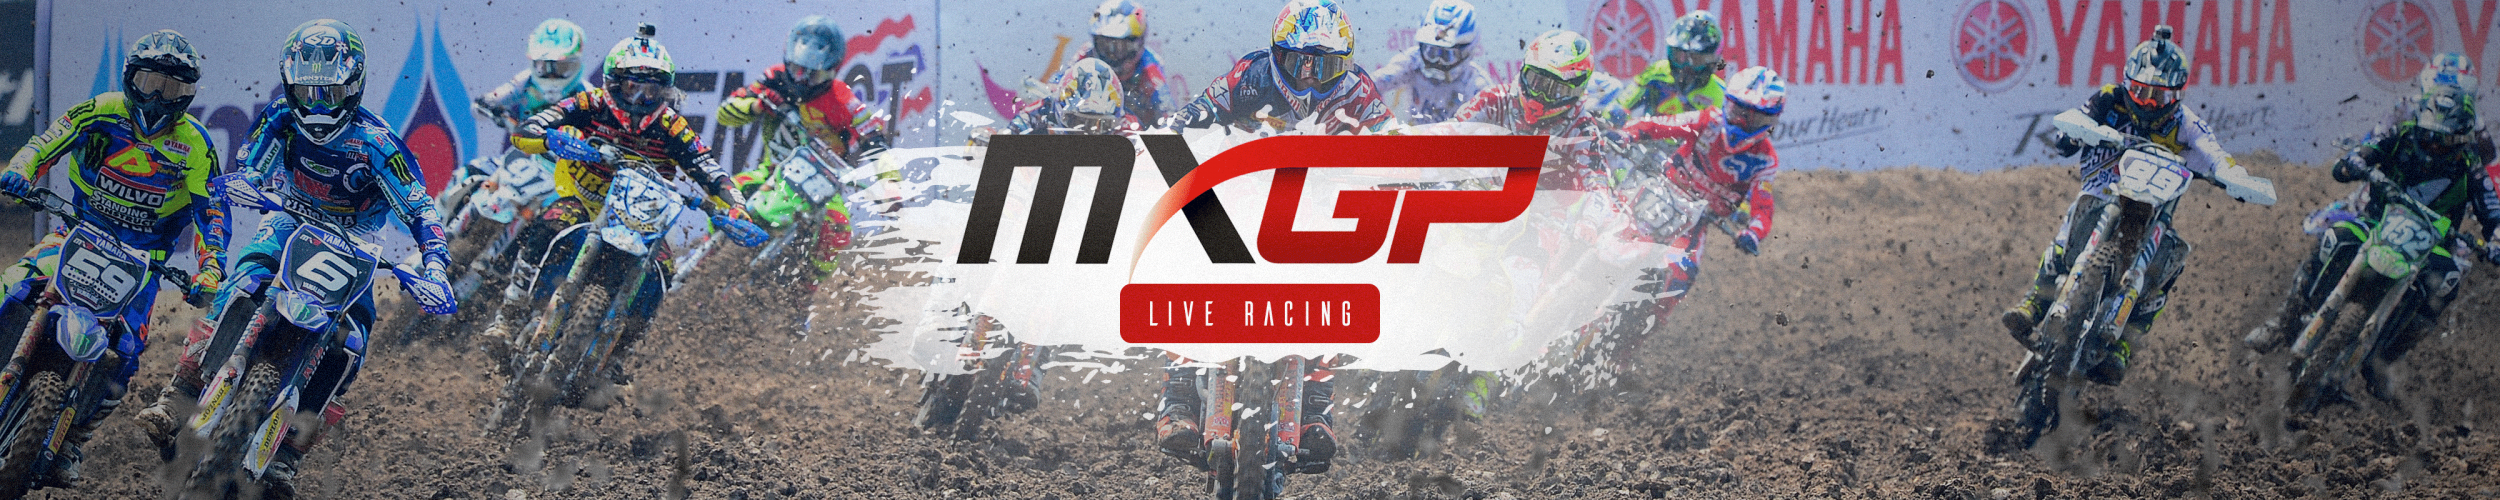 mxgp live stream free motorsport tv